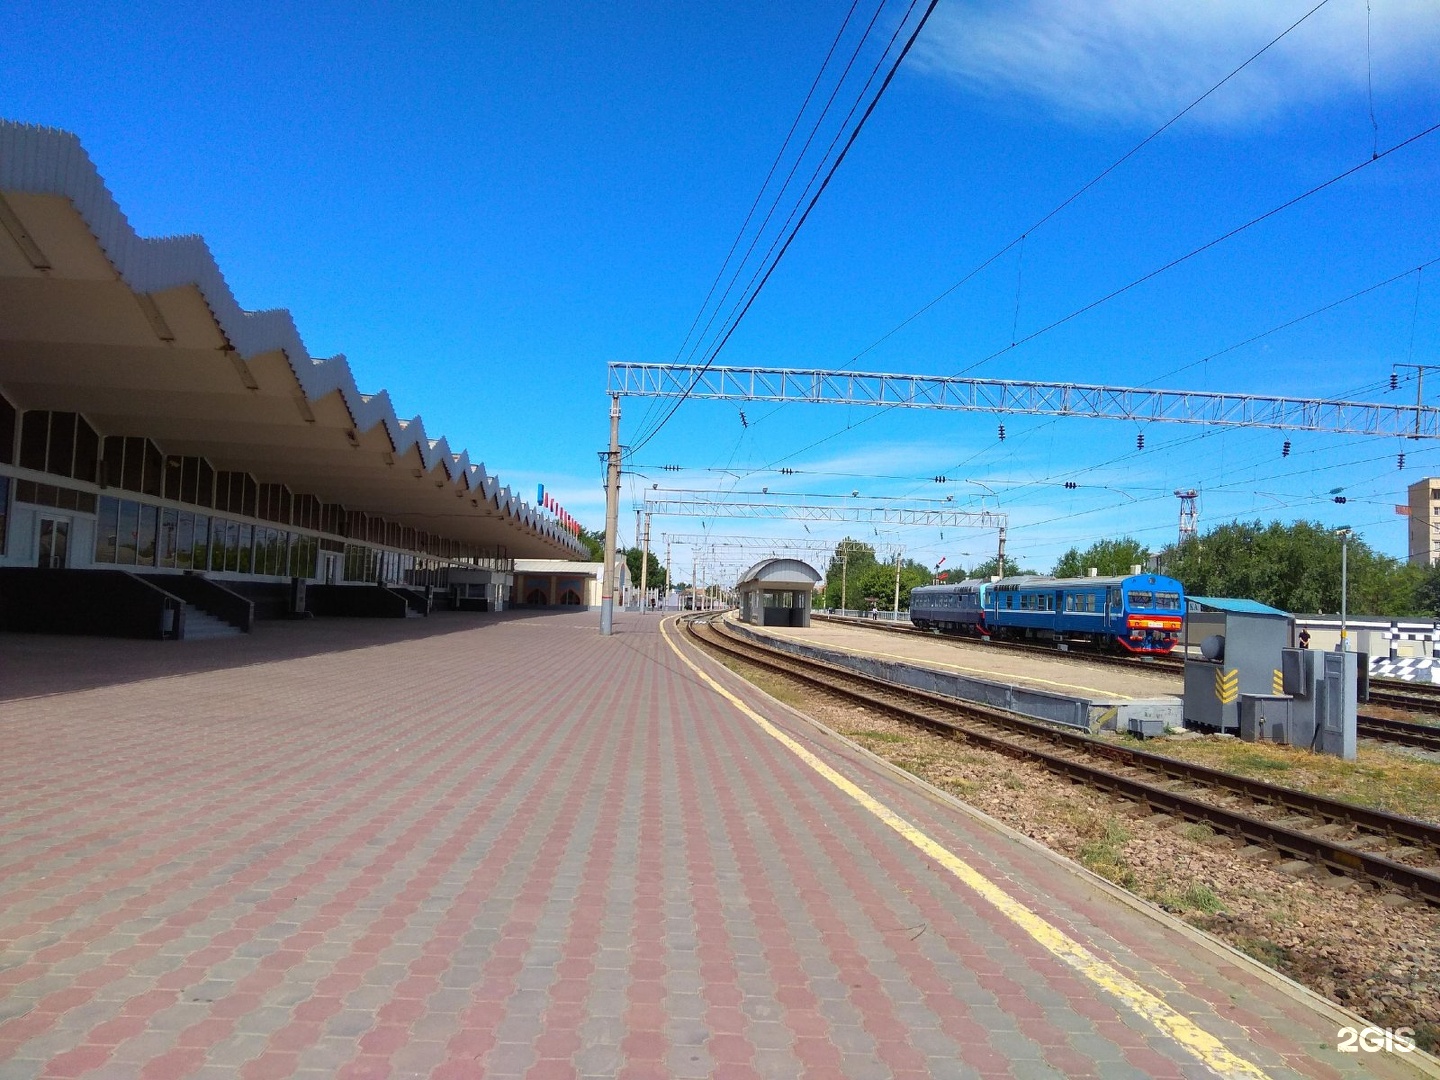 Жд астрахань телефон. Вокзал Астрахань 1. ЖД вокзал Астрахань. Железнодорожная станция Астрахань. Астрахань 1 ЖД вокзал.